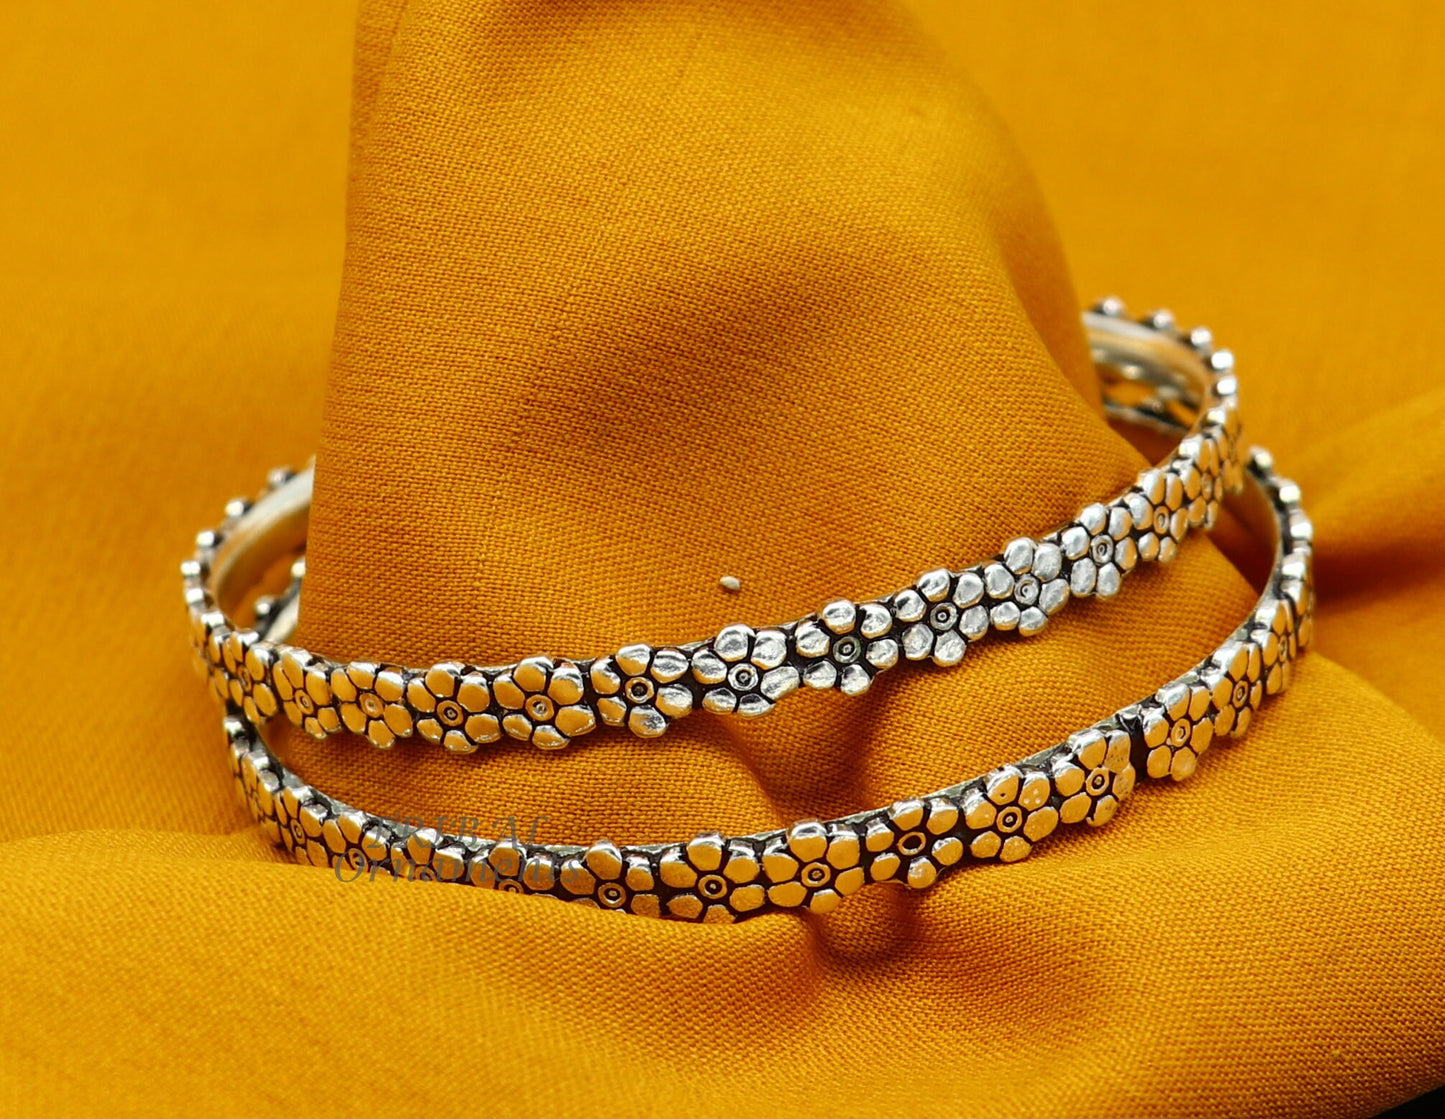 Vintage design floral style 925 sterling silver bangles bracelet, fancy stylish gorgeous kangan tribal belly dance jewelry nba345 - TRIBAL ORNAMENTS